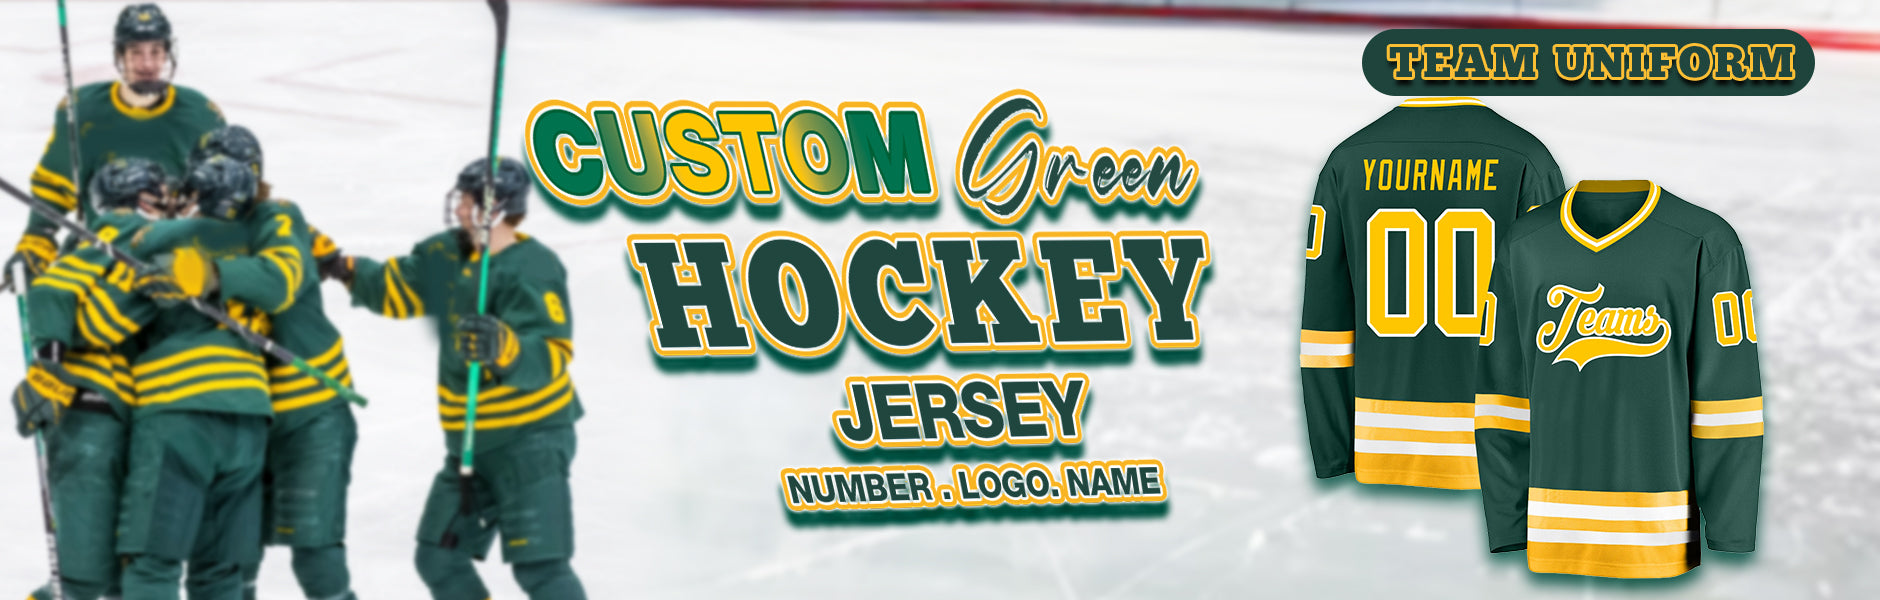 custom hockey green jersey